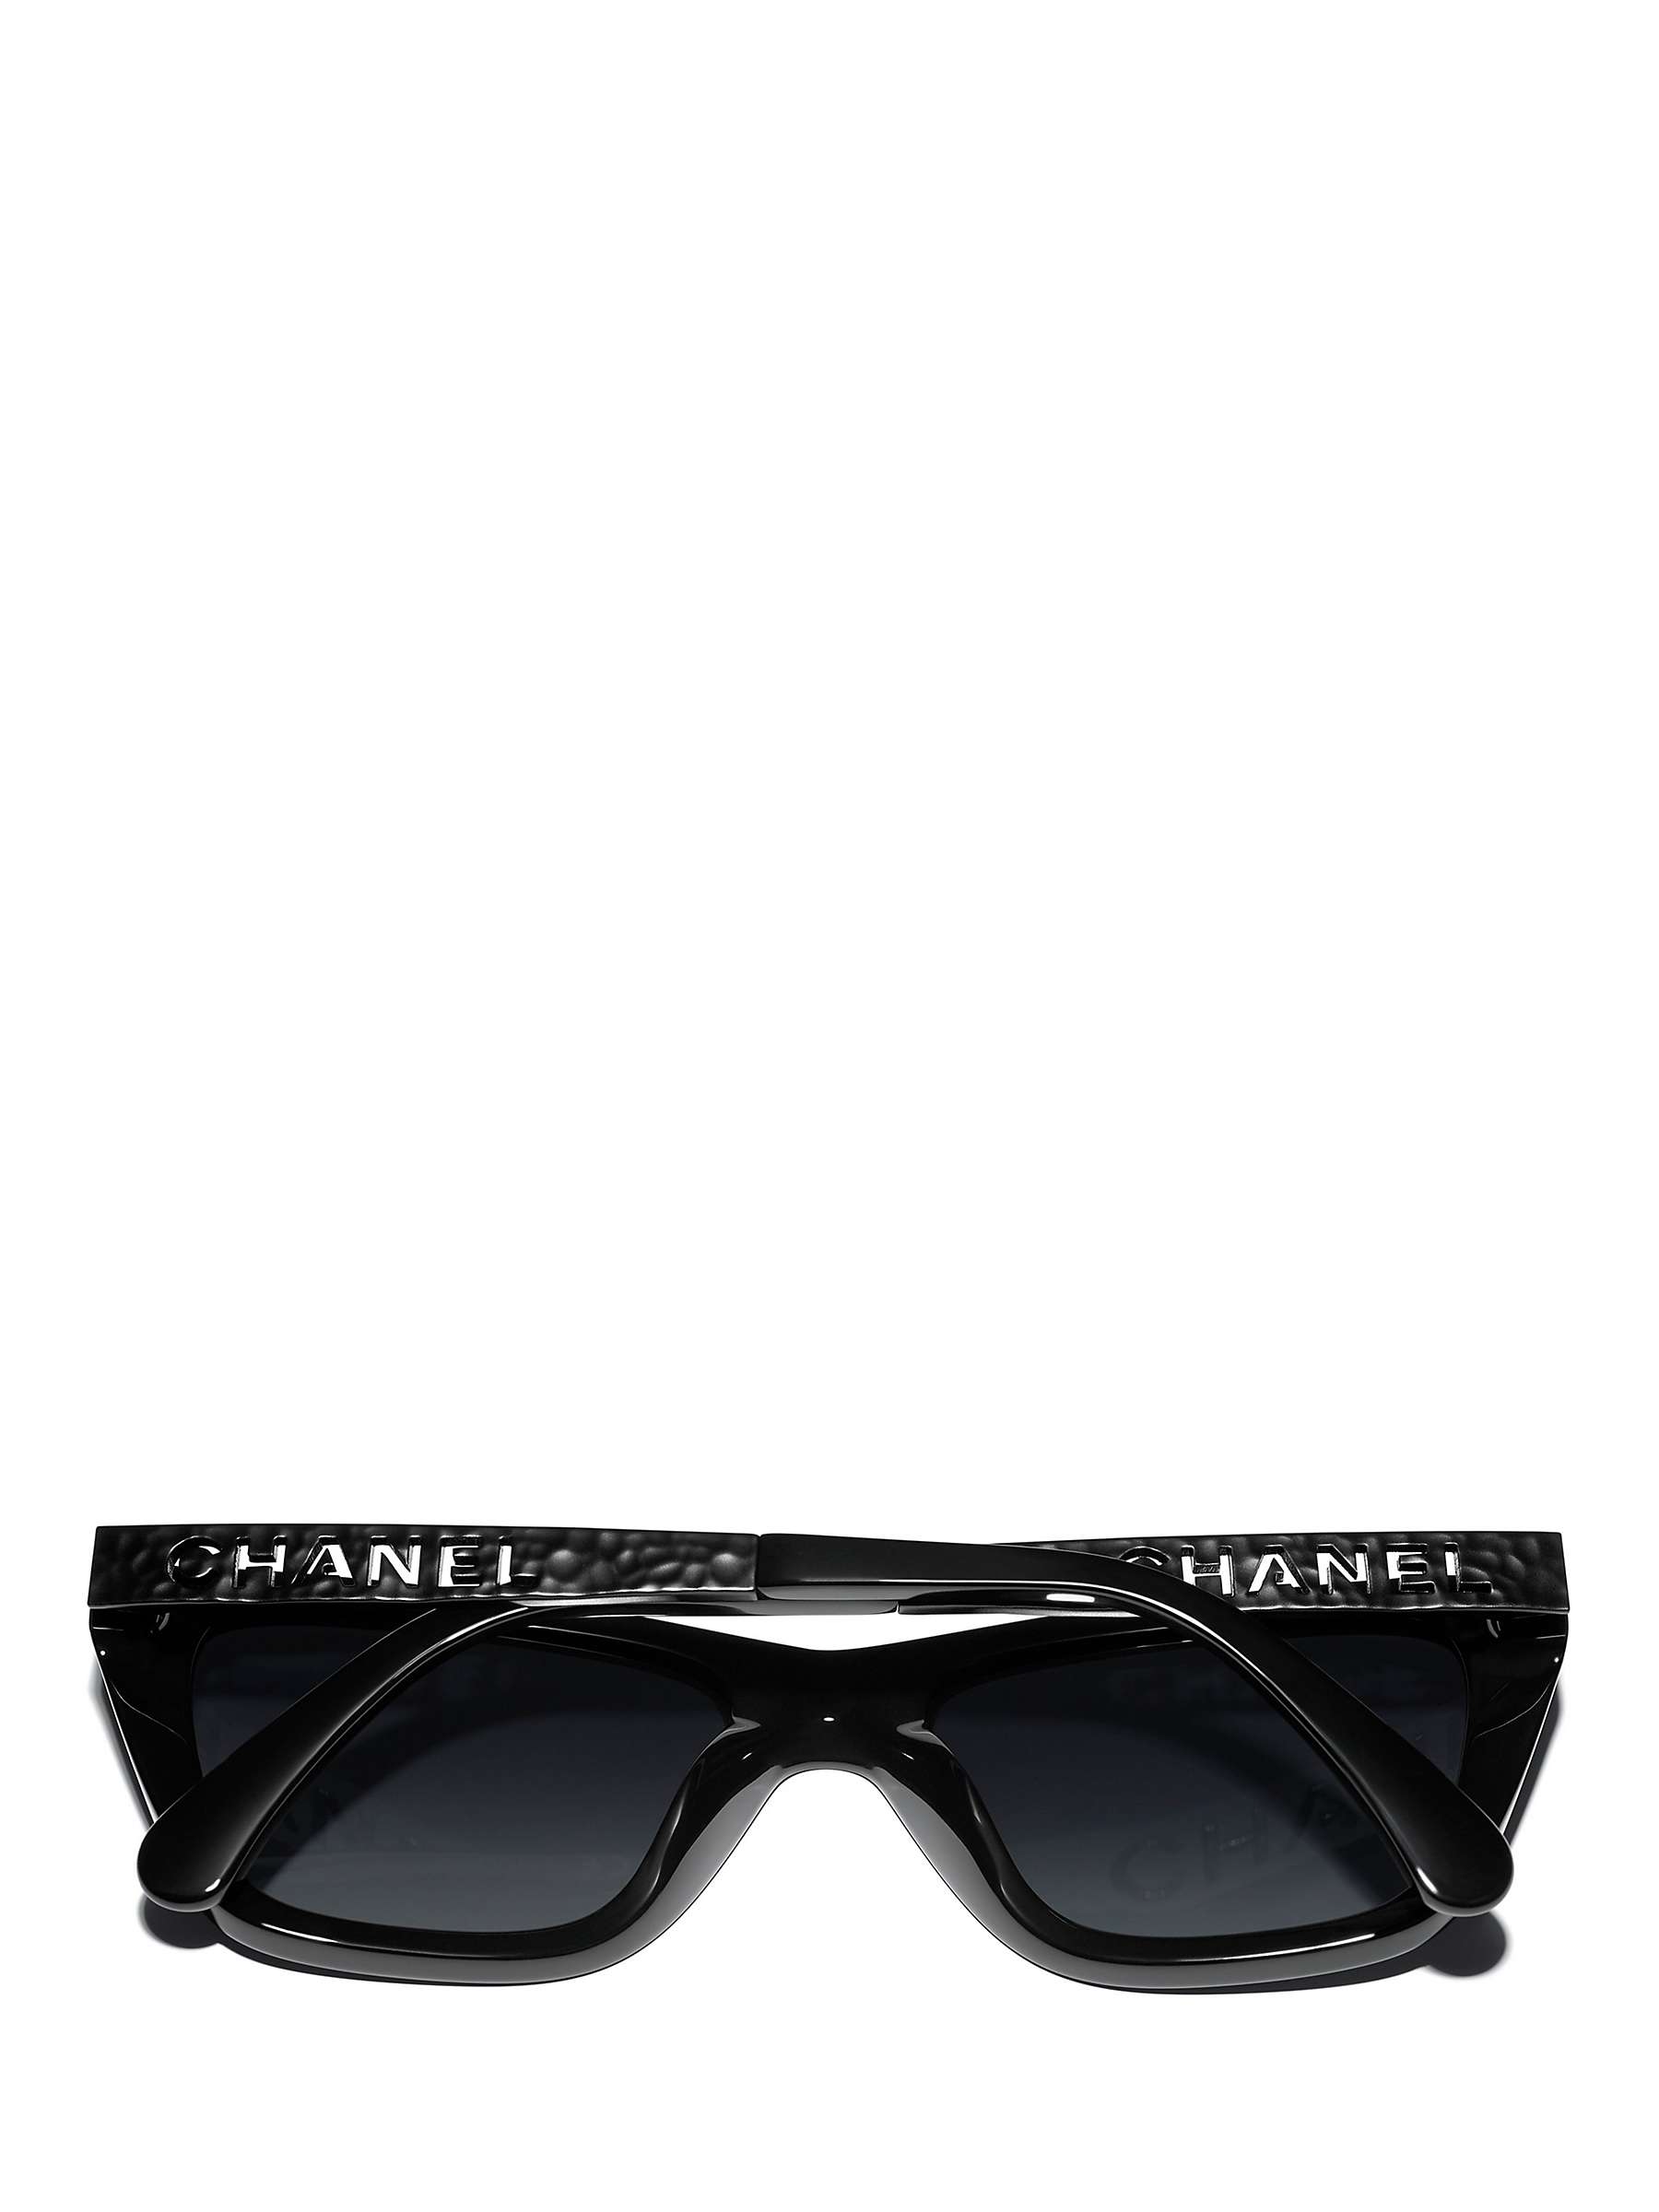 Buy CHANEL Rectangular Sunglasses CH5442 Black/Grey Gradient Online at johnlewis.com